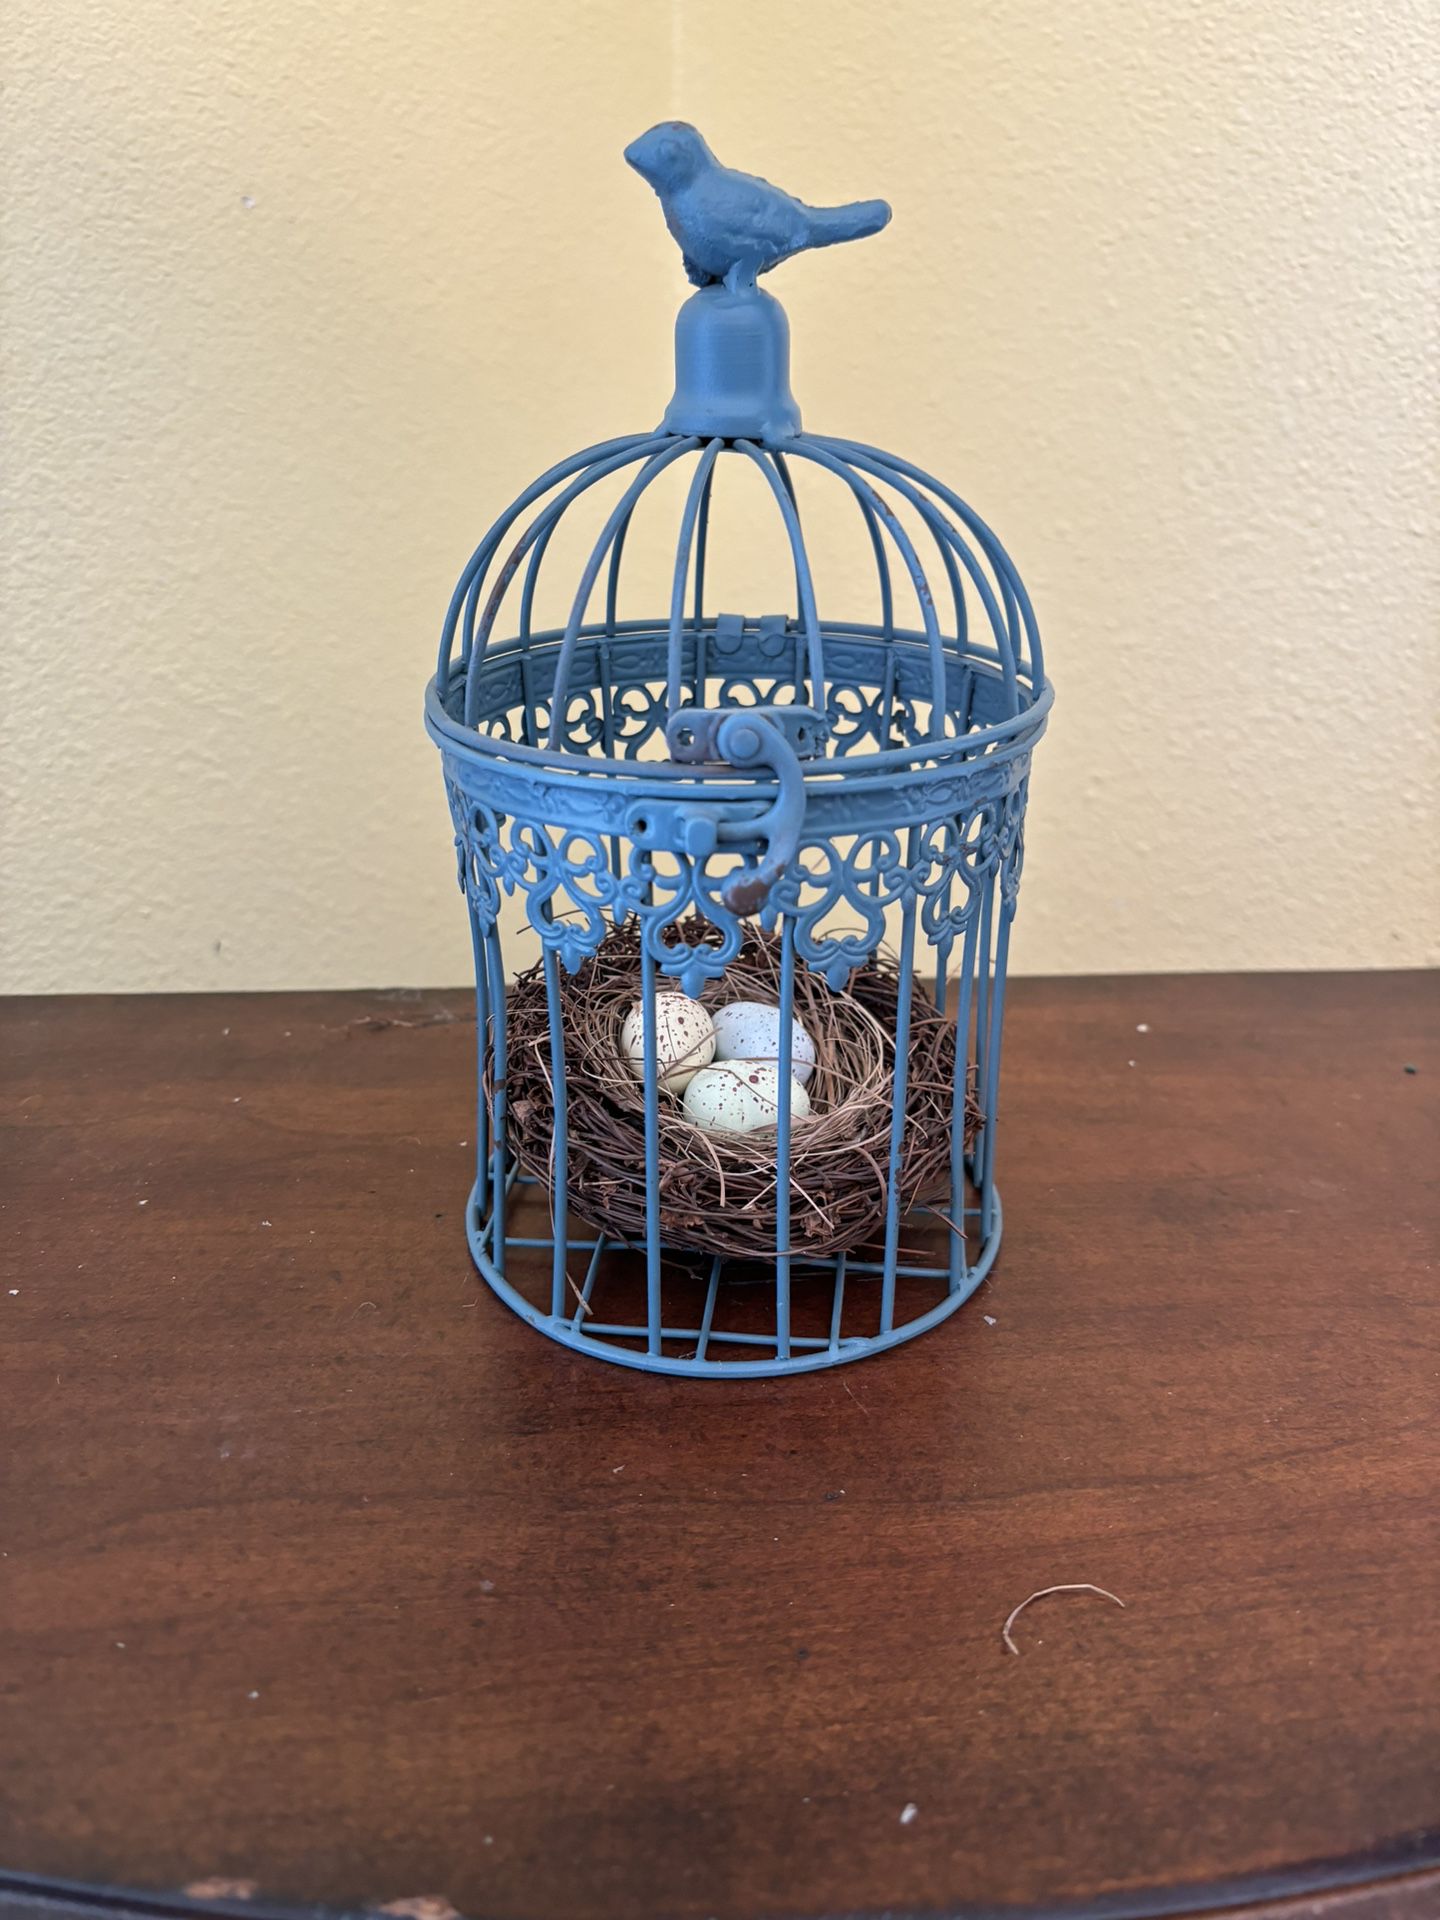 Bird Cage Decoration 